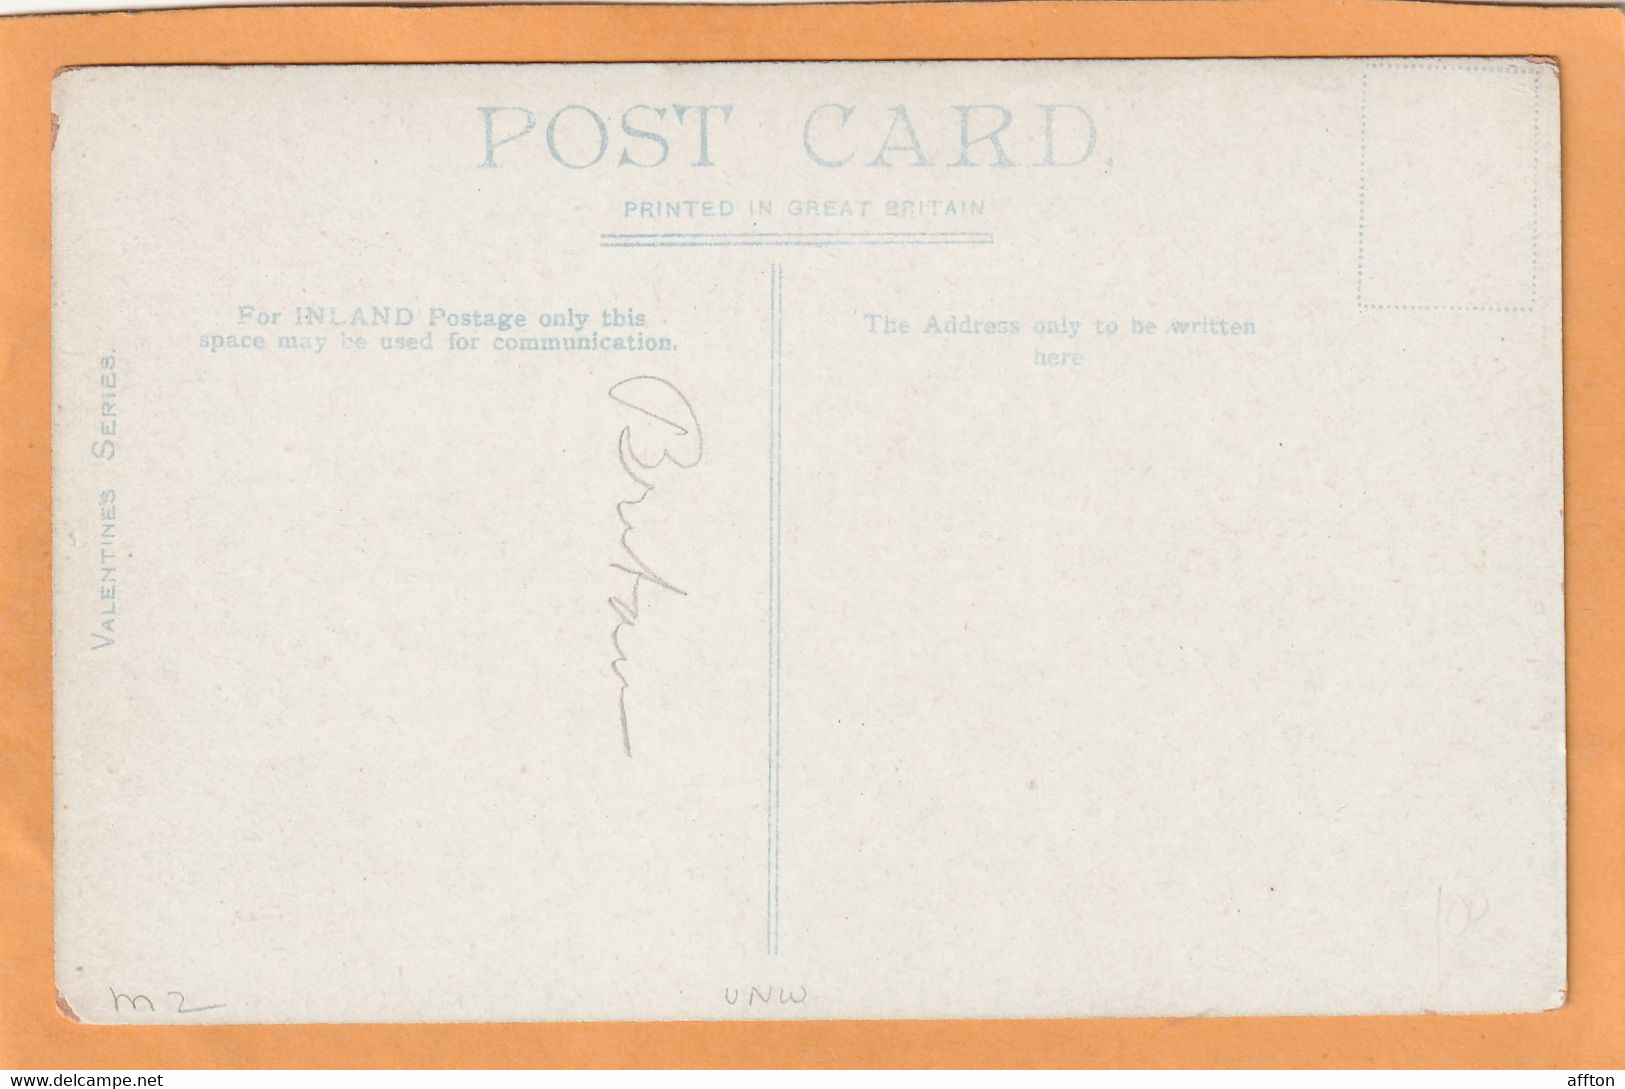 Ambleside UK 1906 Postcard - Ambleside